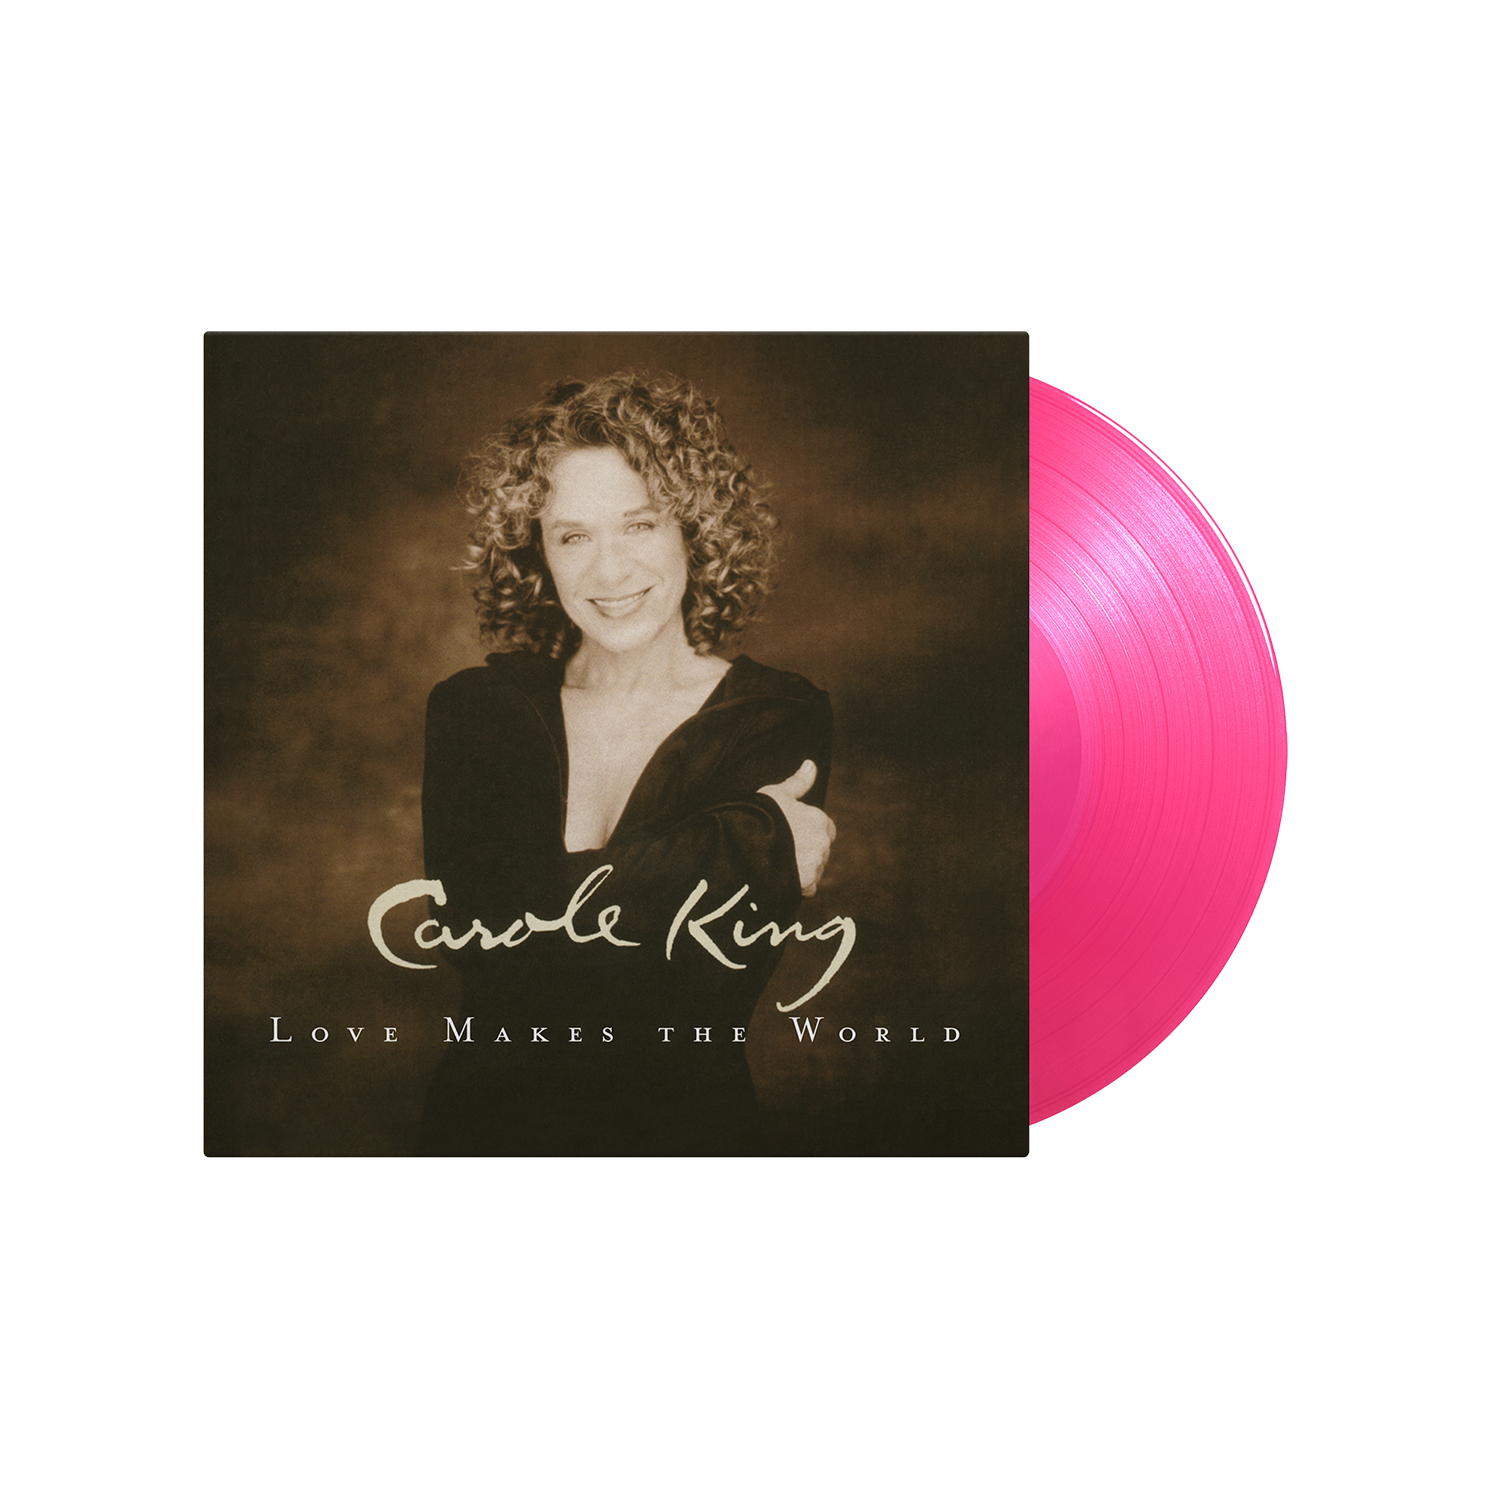 Carole King - Love Makes The World: Limited Translucent Pink Vinyl LP